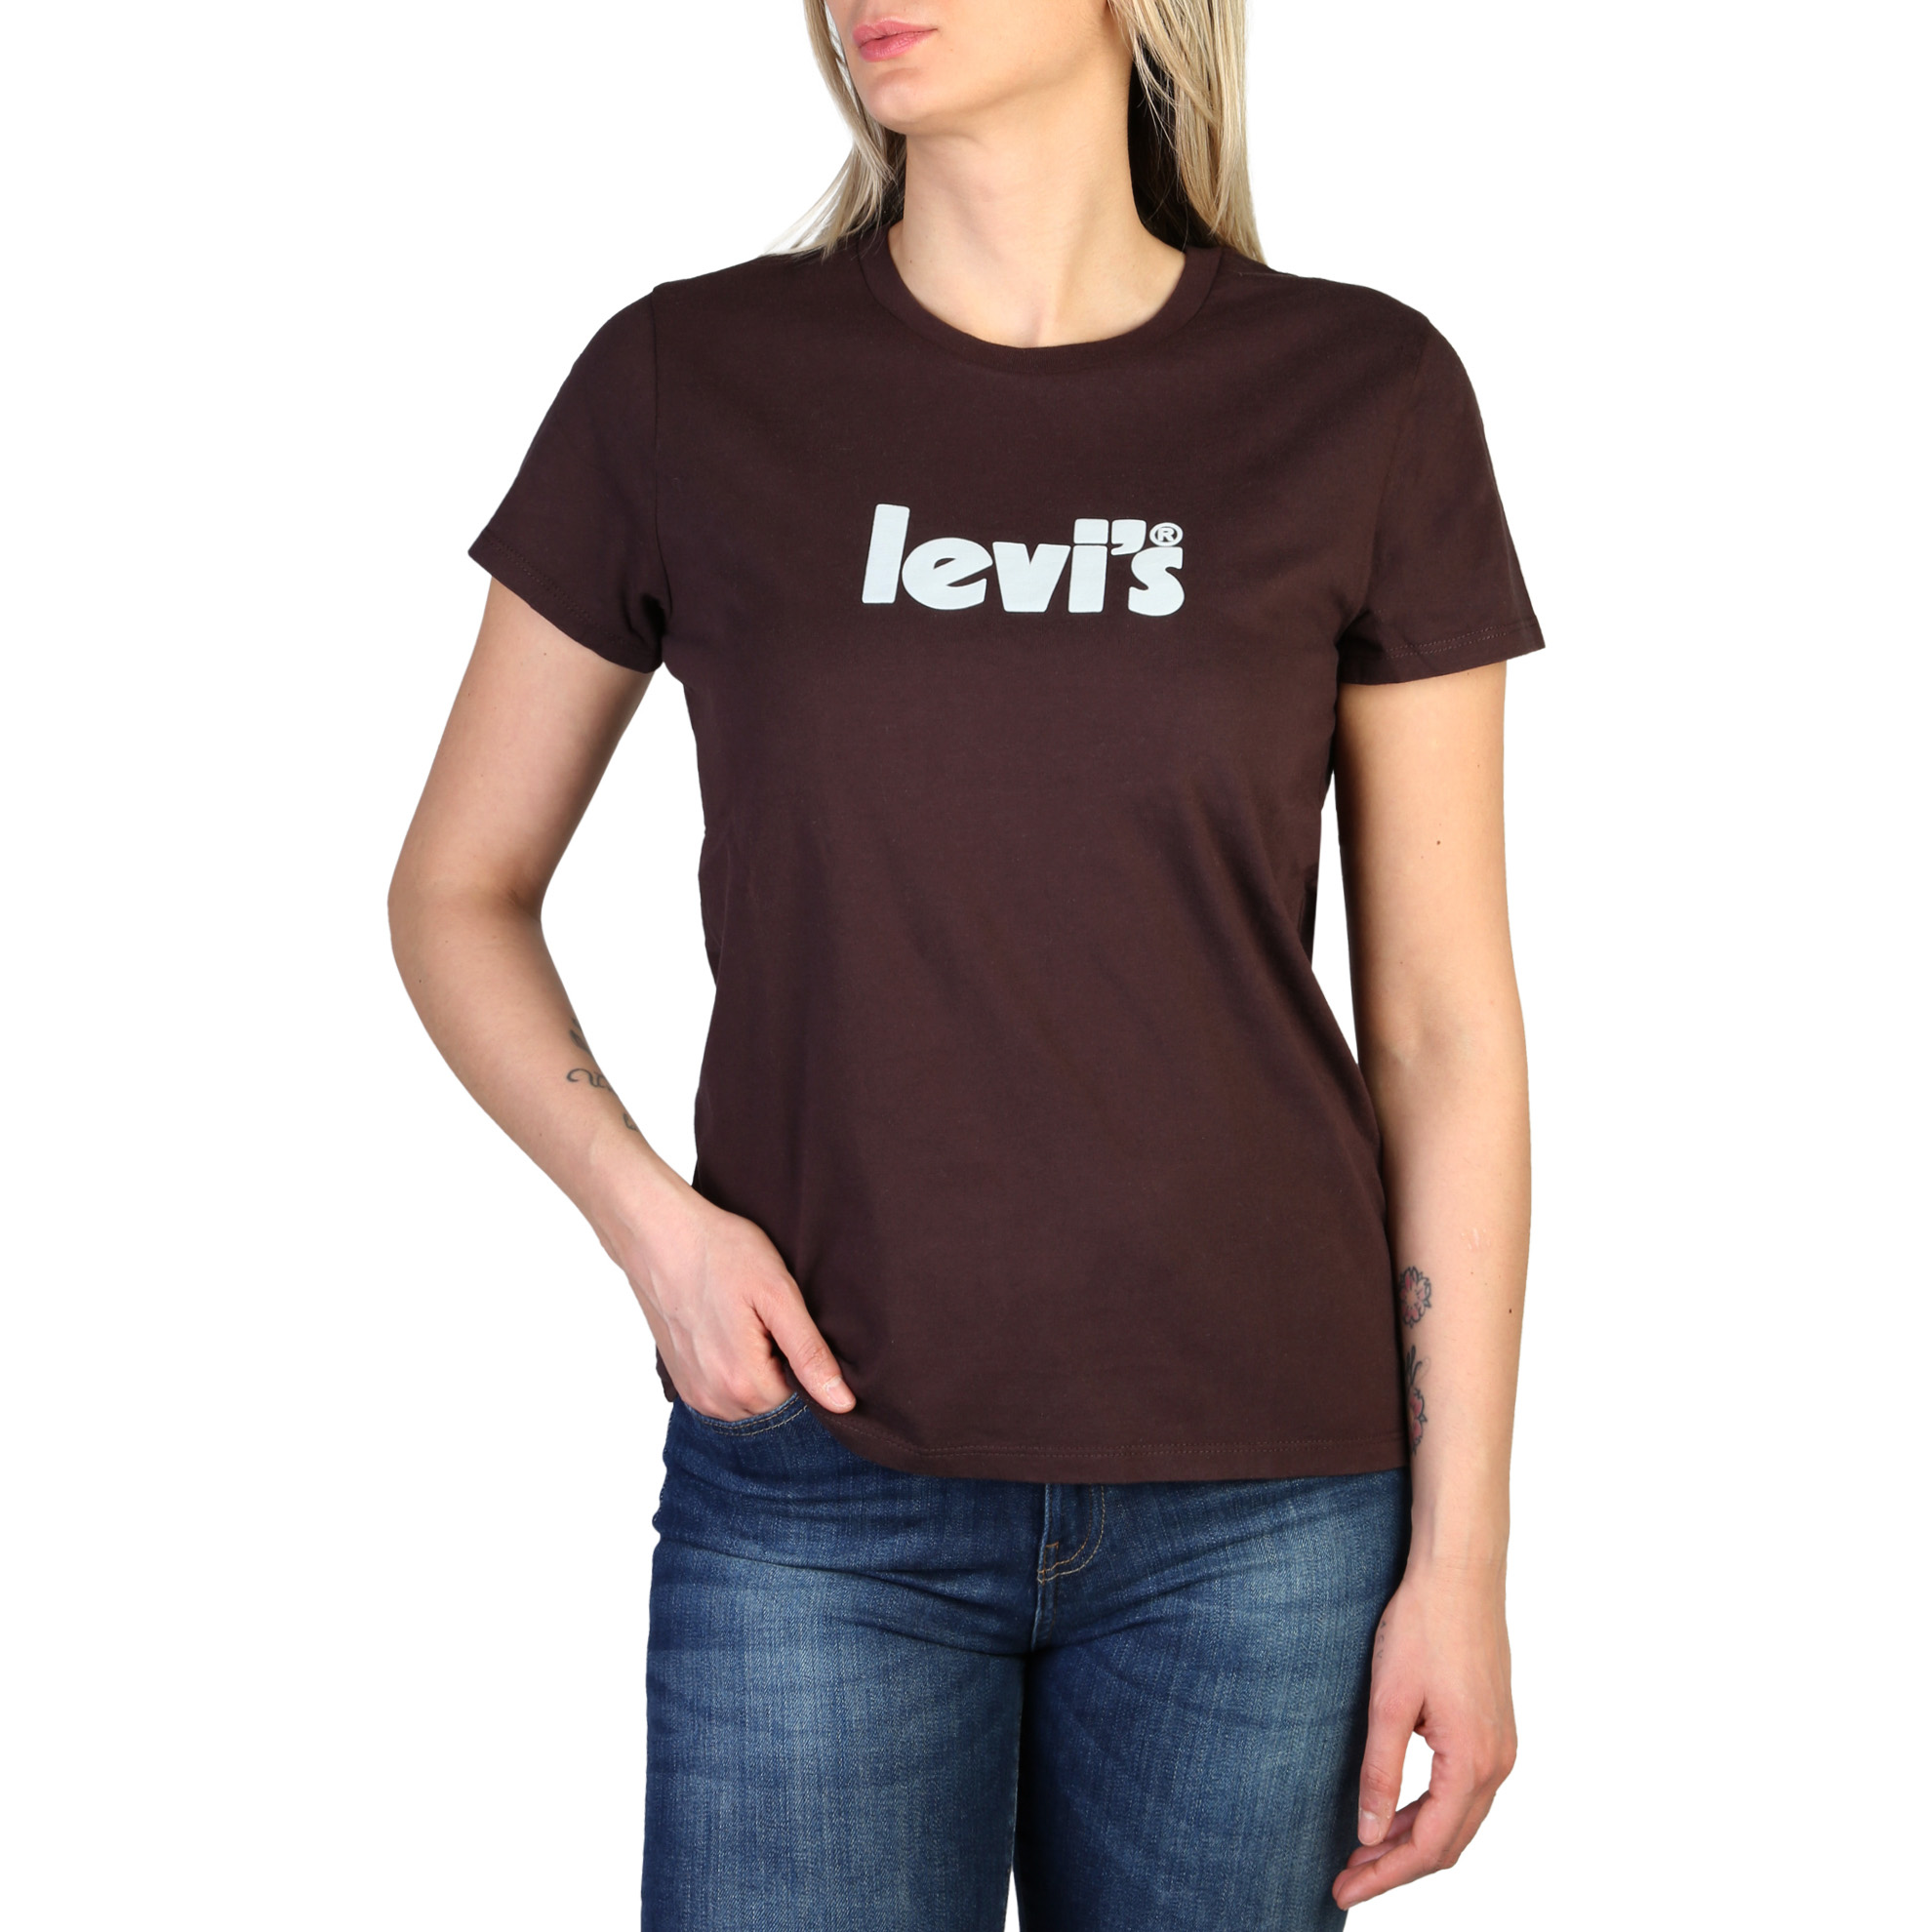 Levis - T-shirt femme